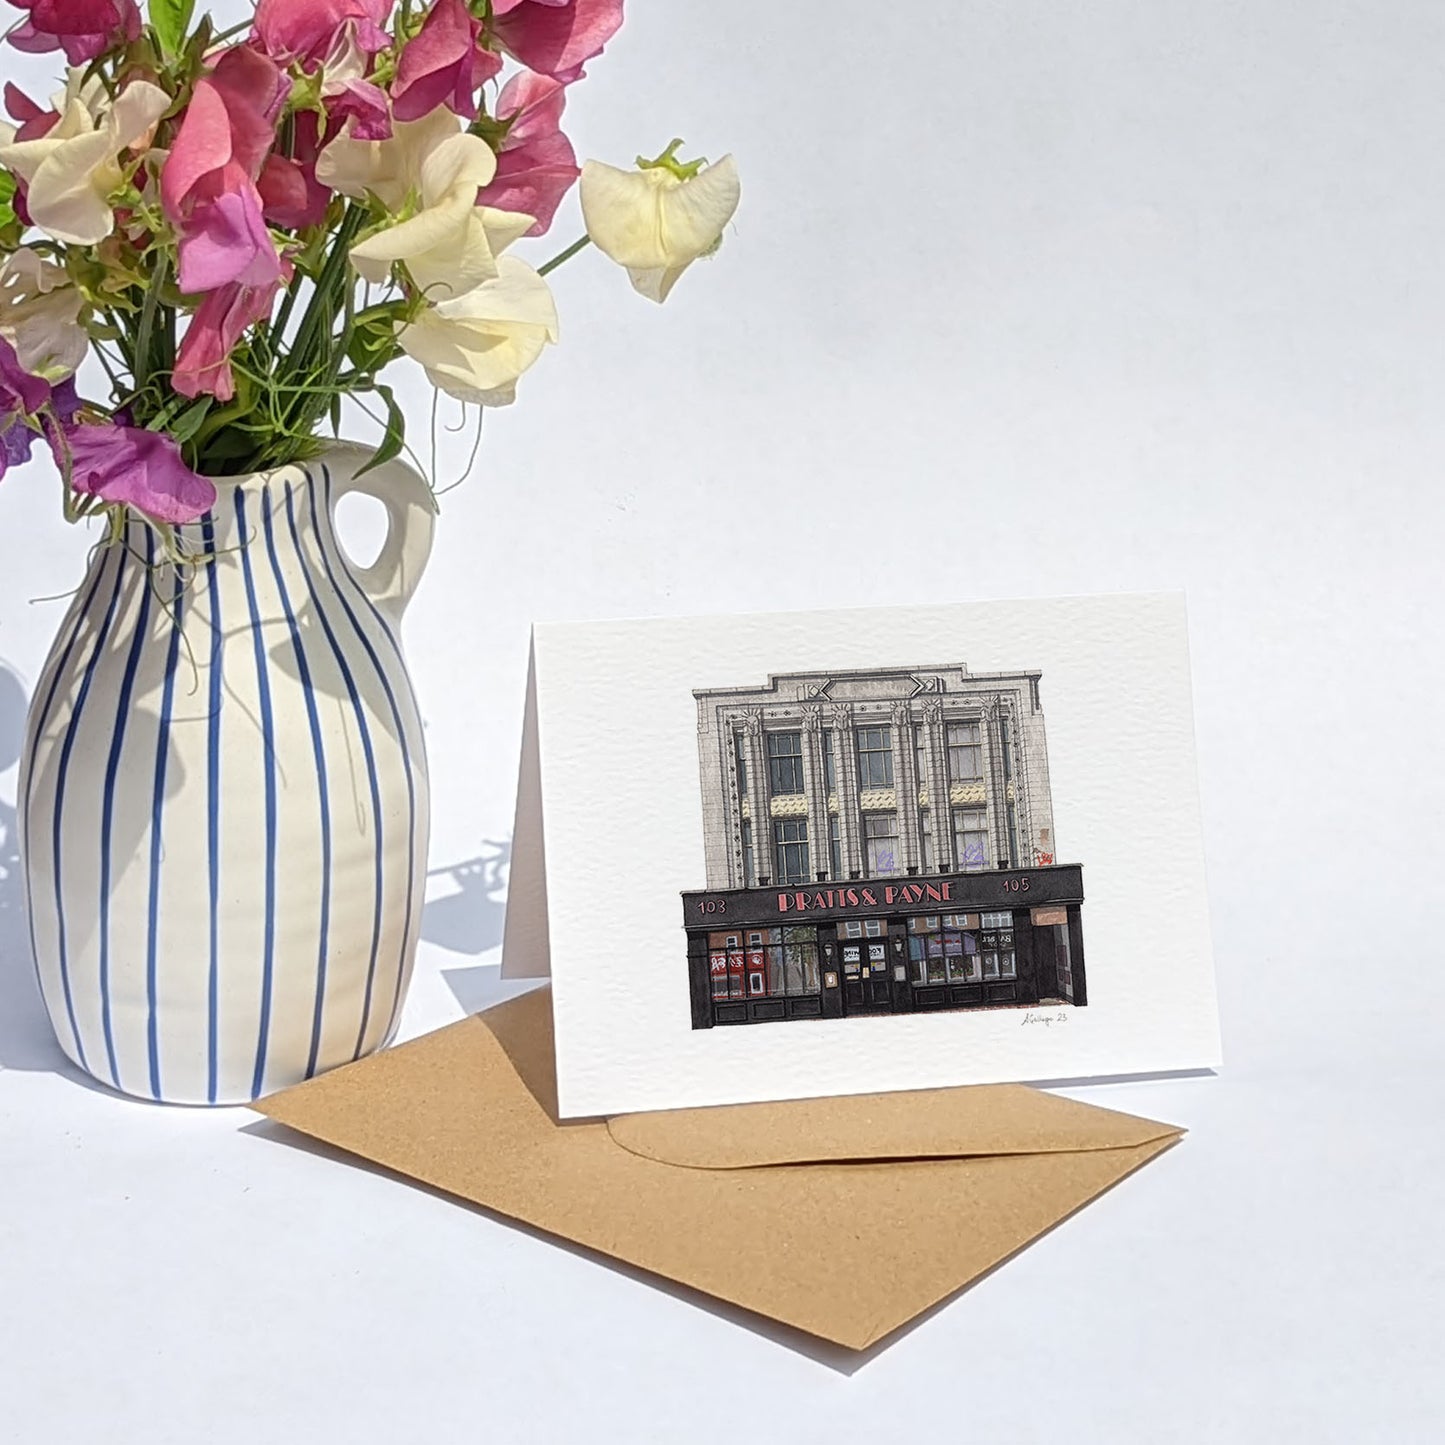 Streatham - Pratts & Payne pub - Greeting card with envelope